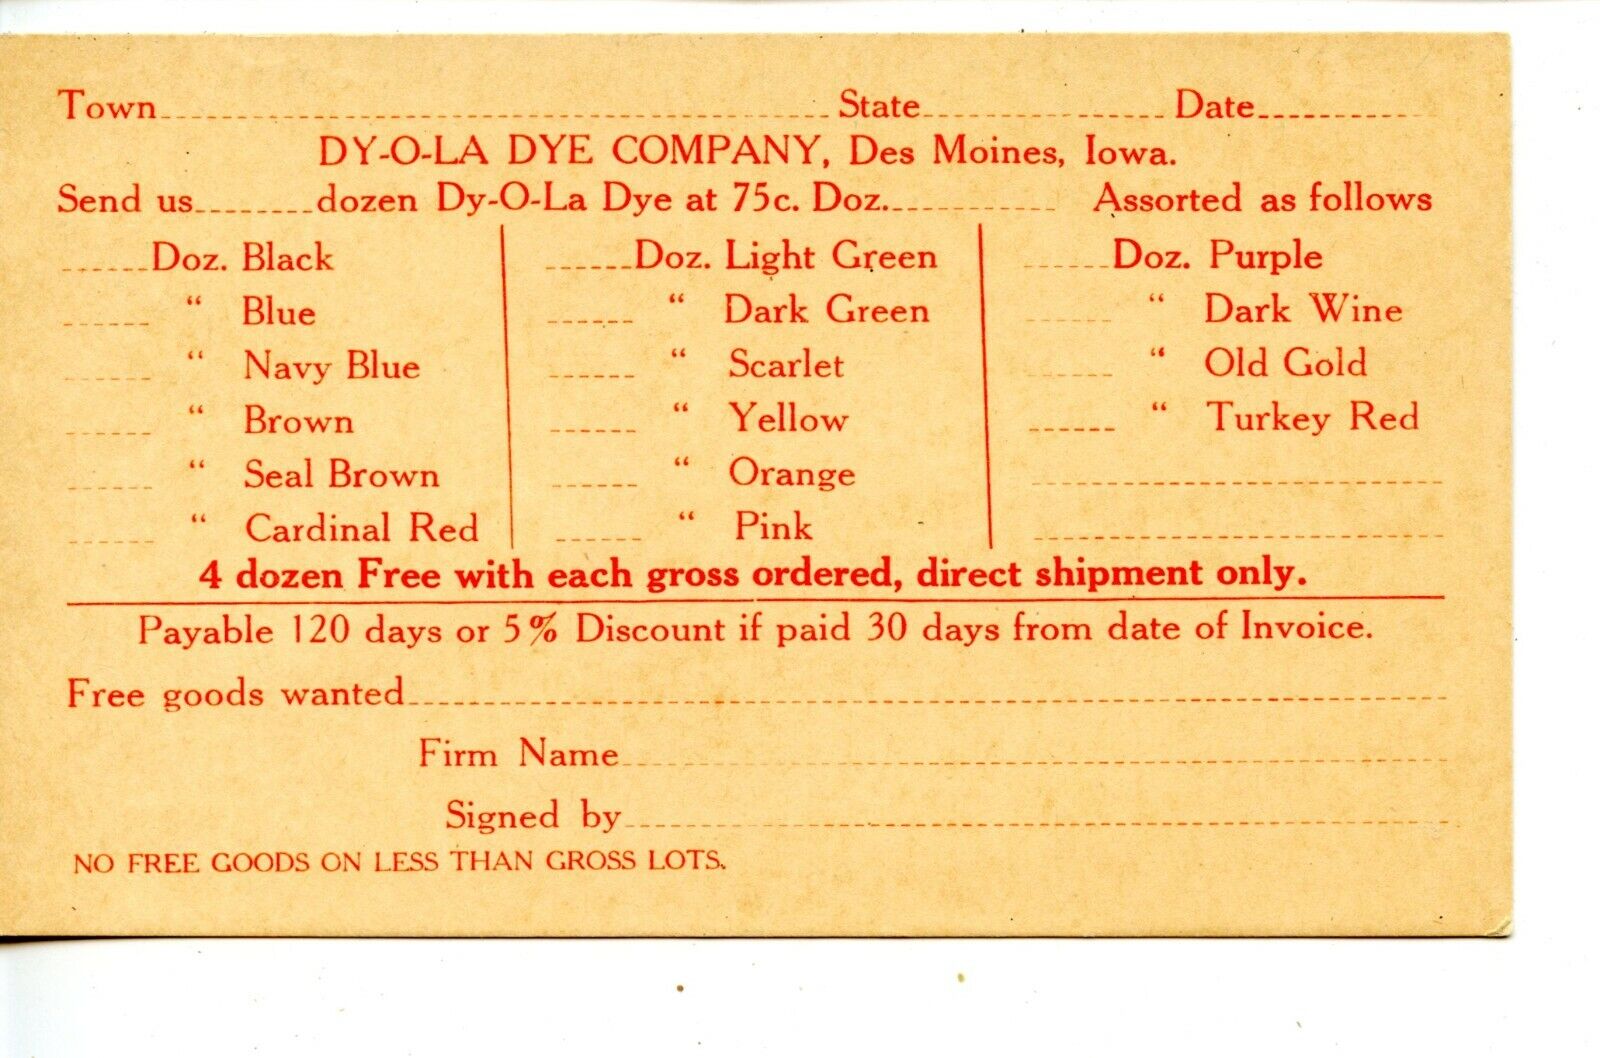 Dy-o-la Dye Company-Des Moines-Vintage Postal Order Form-Advertising Postcard